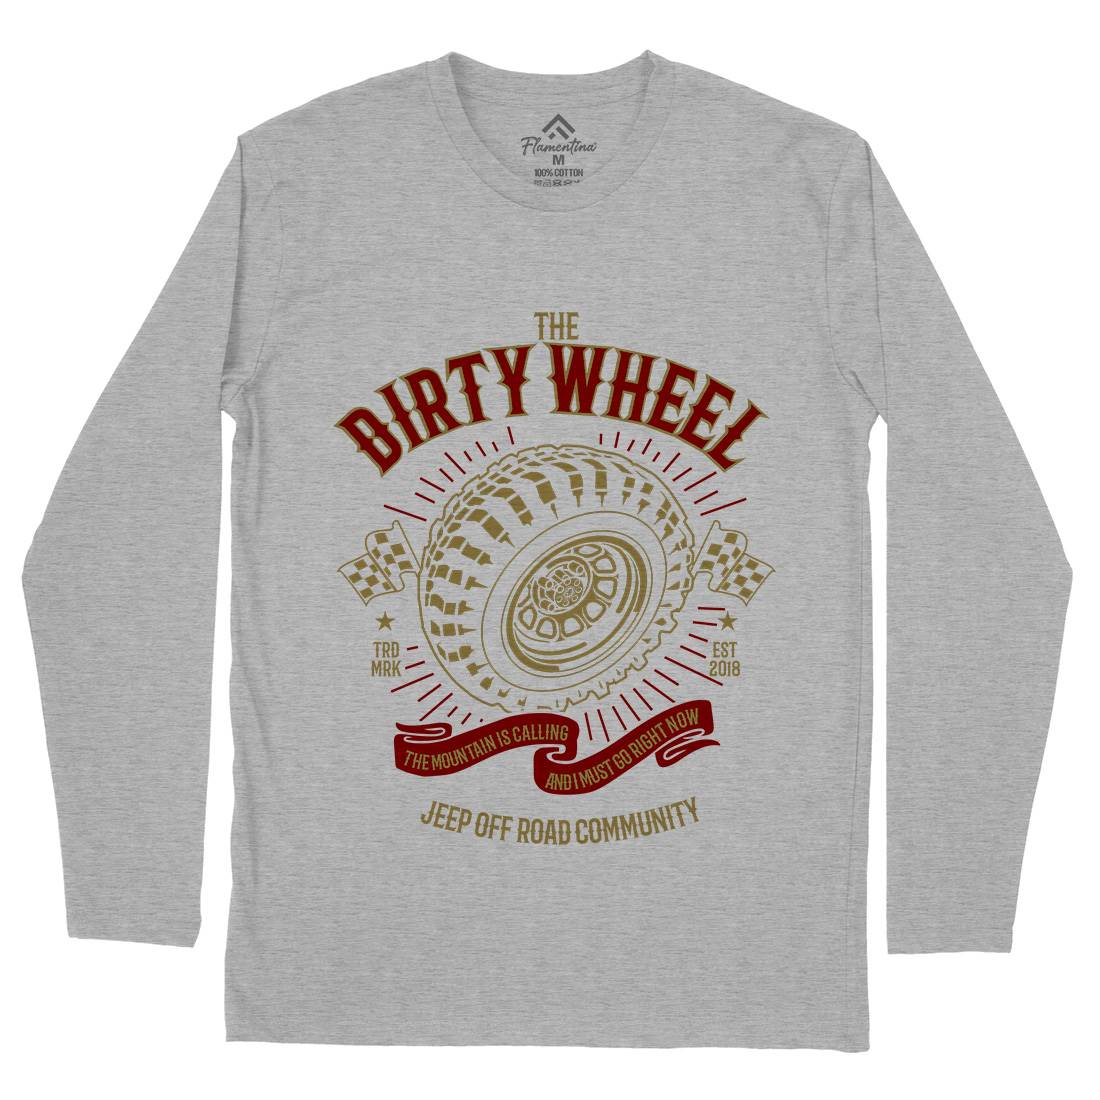 The Dirty Wheel Mens Long Sleeve T-Shirt Cars B262